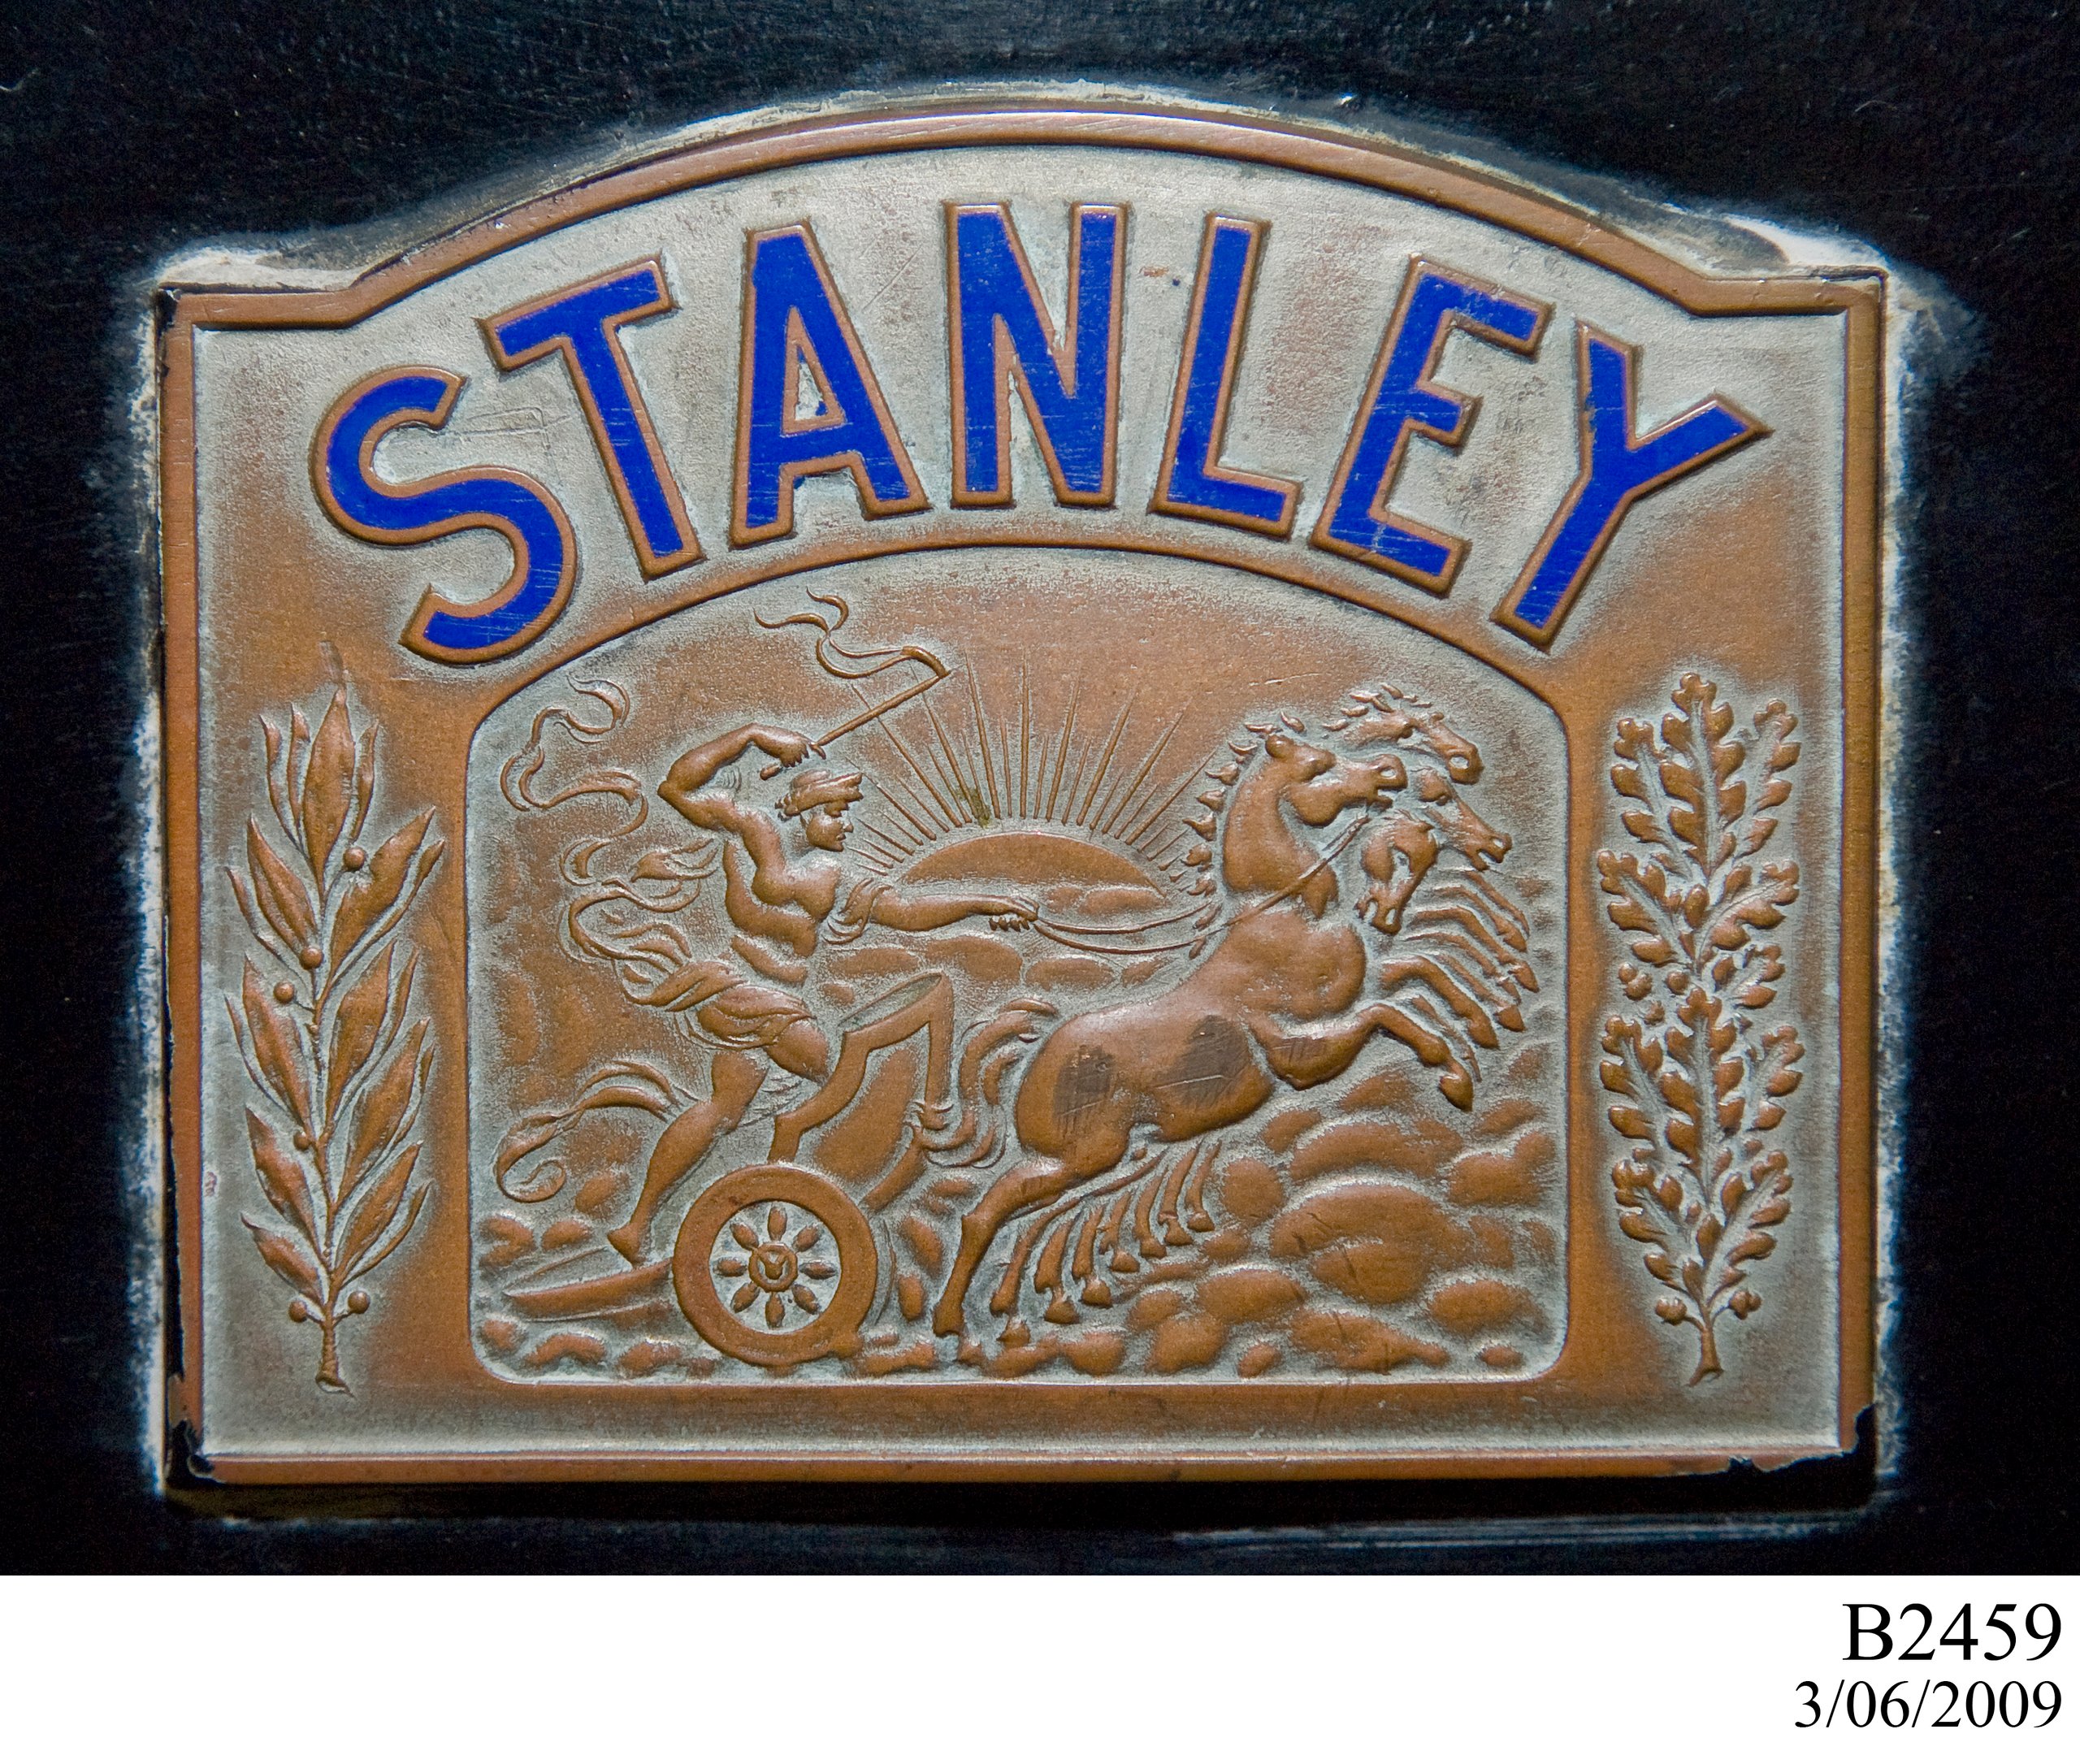 Stanley Steamer model 740B 20 hp steam car